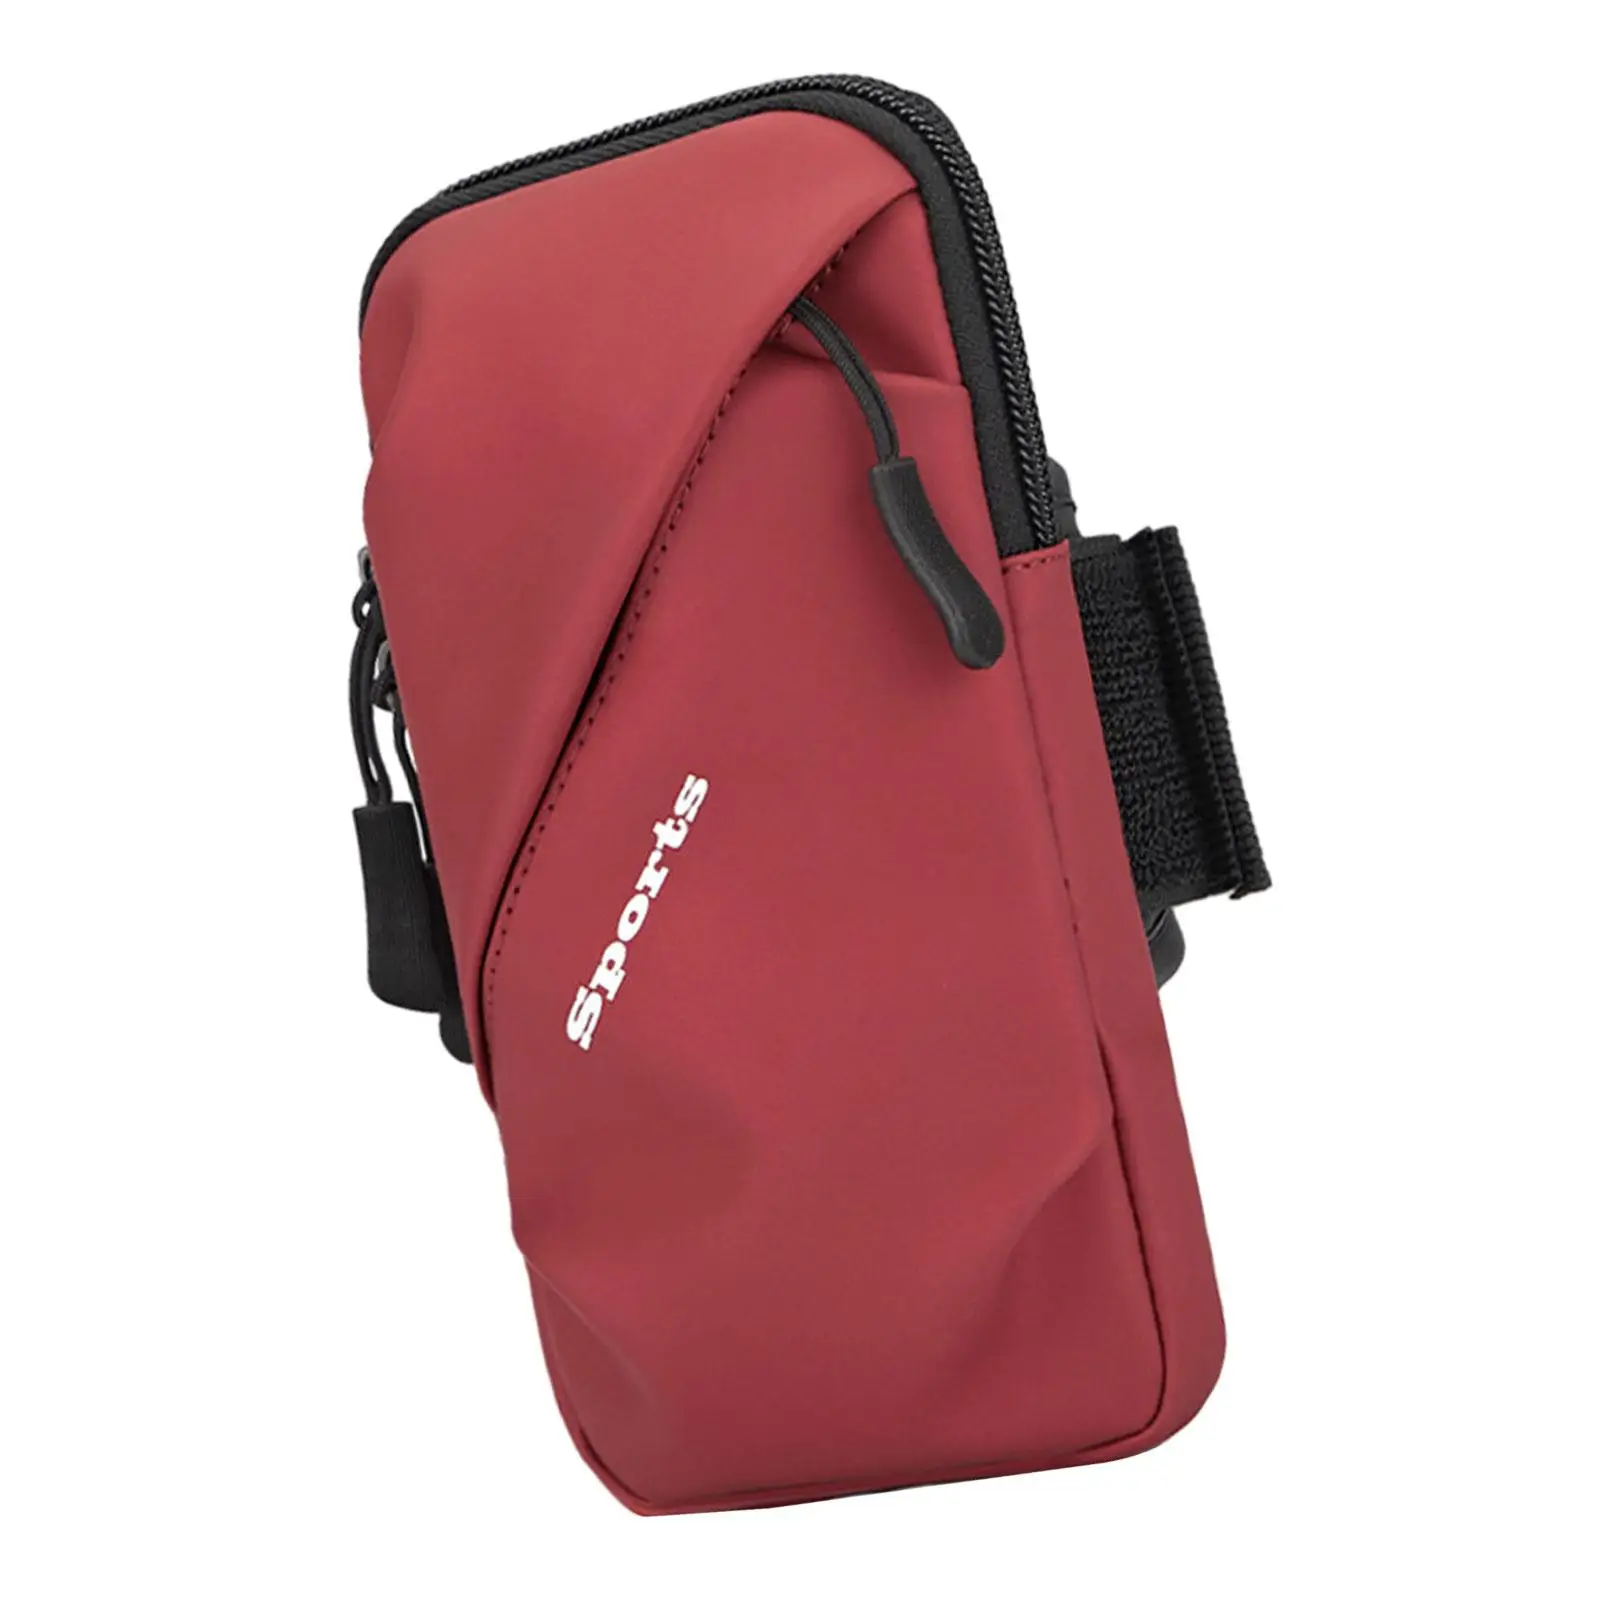 Phone Armband Bag Cellphone Holder Women Men Phone Holder Pouch Case Gym Armbands Bag for Running Jogging Travel Hiking